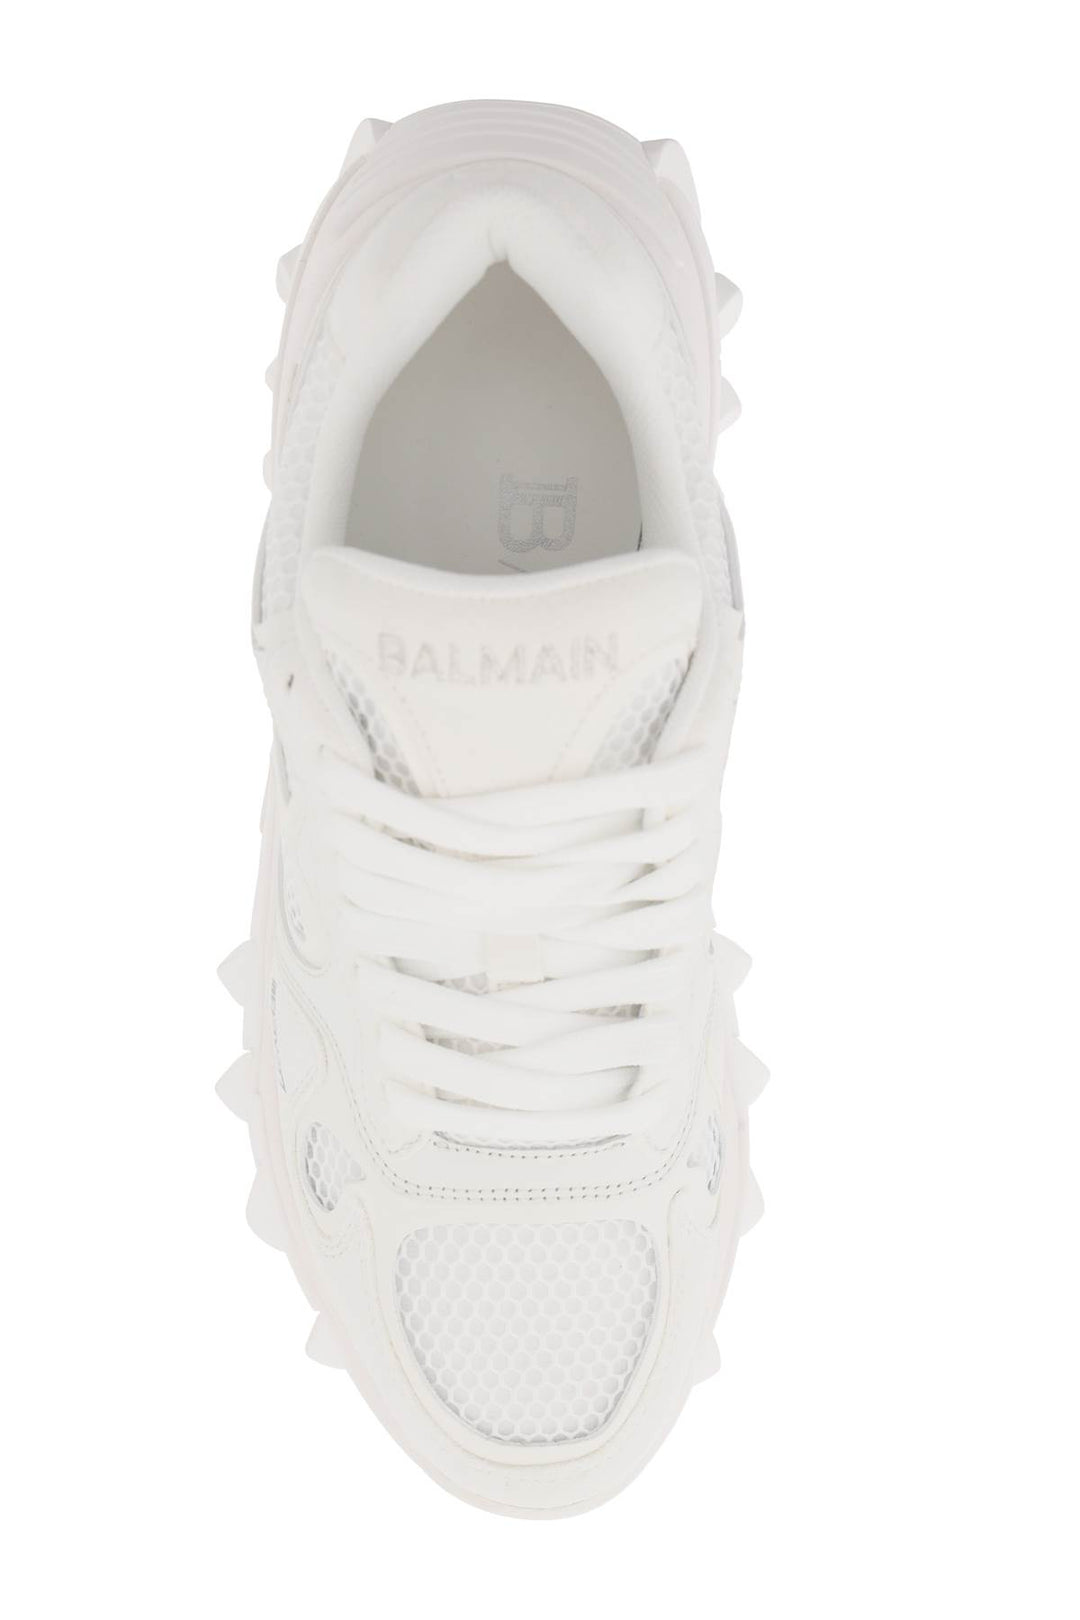 Balmain B East Leather And Mesh Sneakers   Bianco